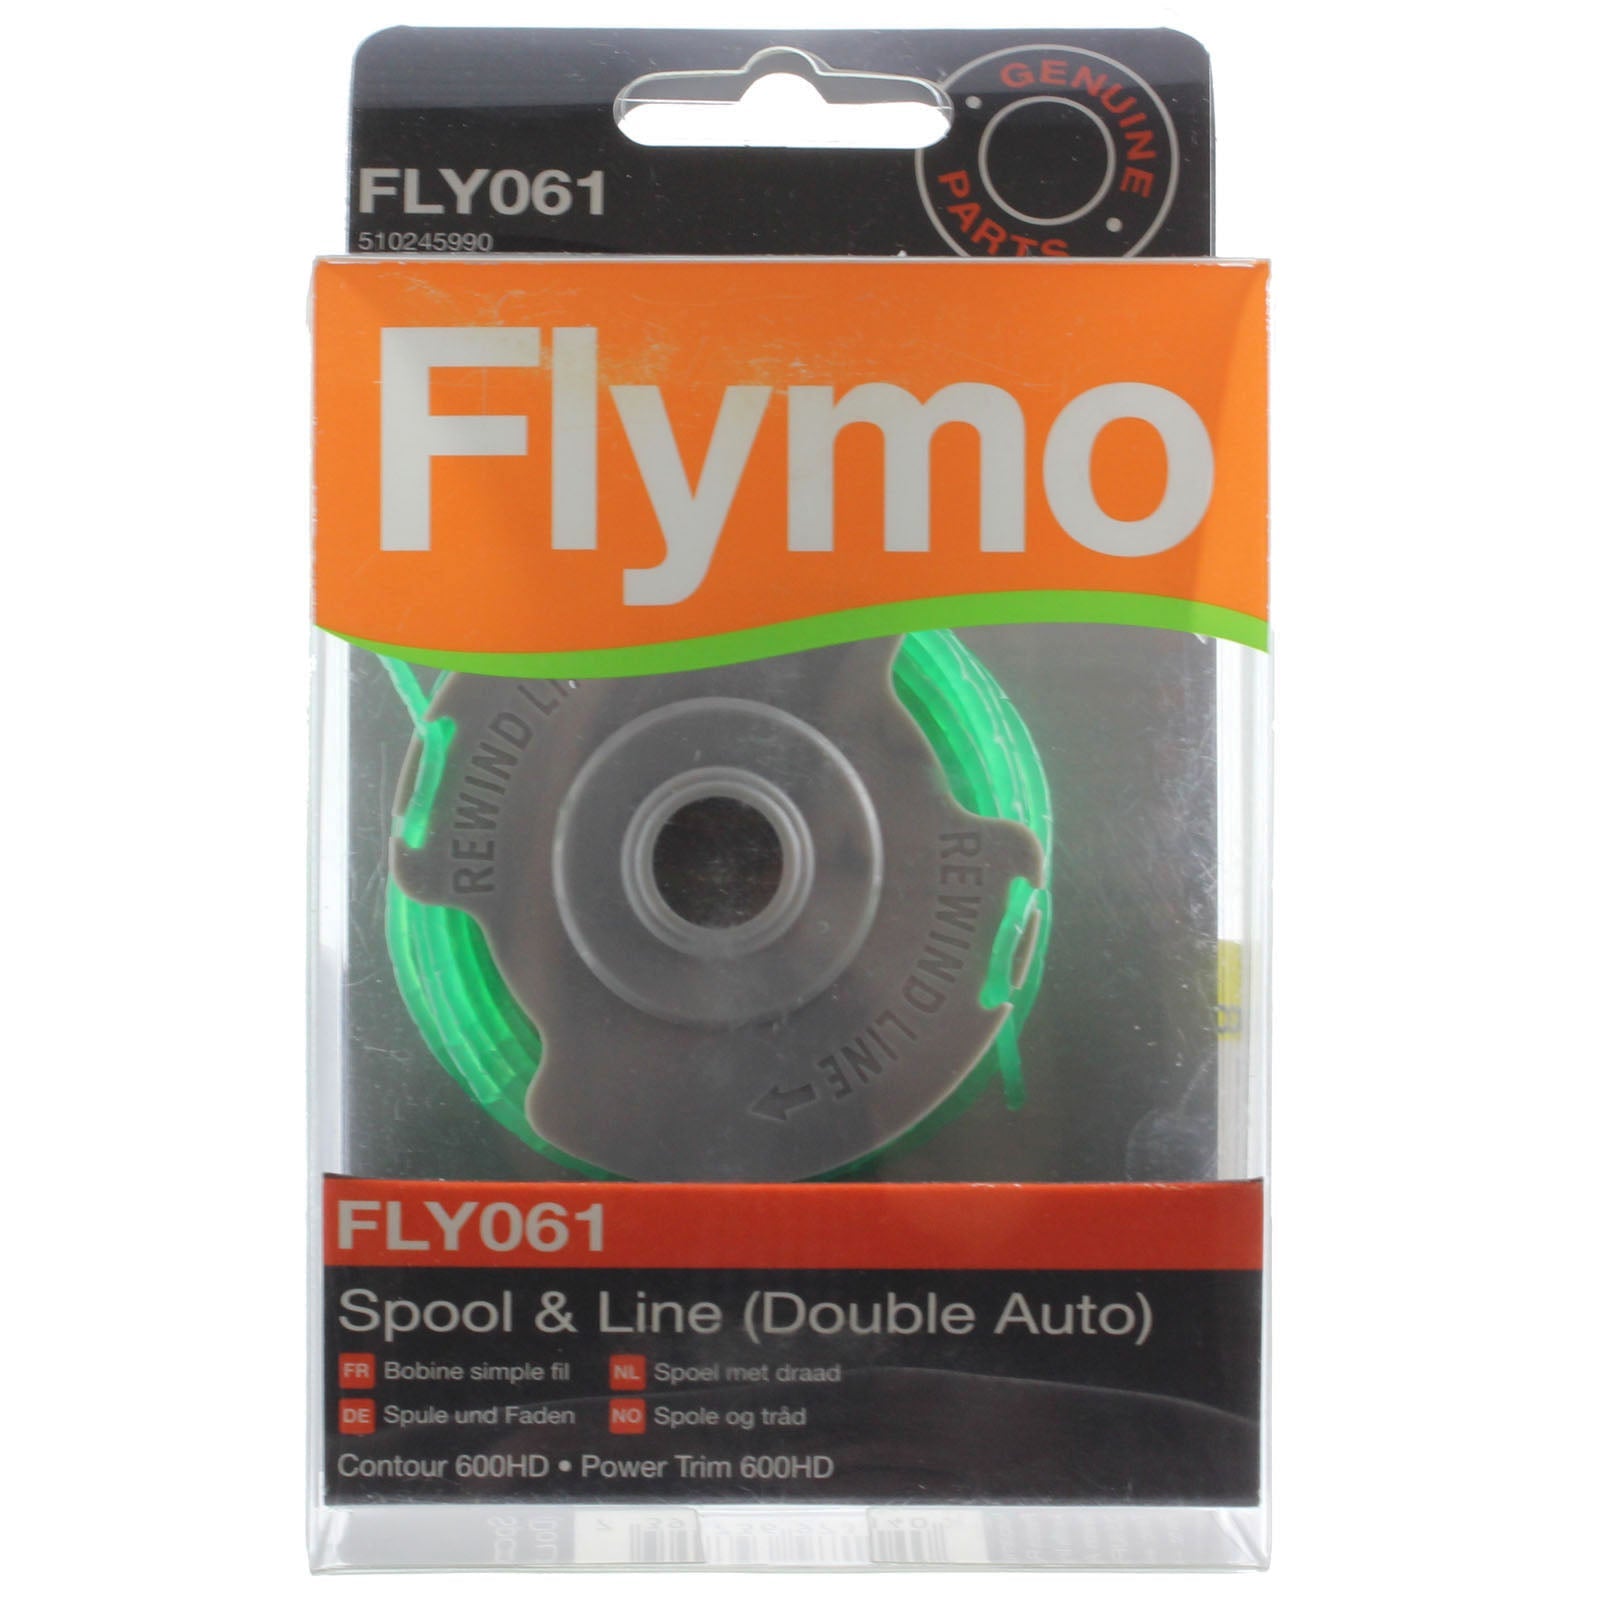 Genuine Original FLYMO Spool & Line FLY061 5102459905